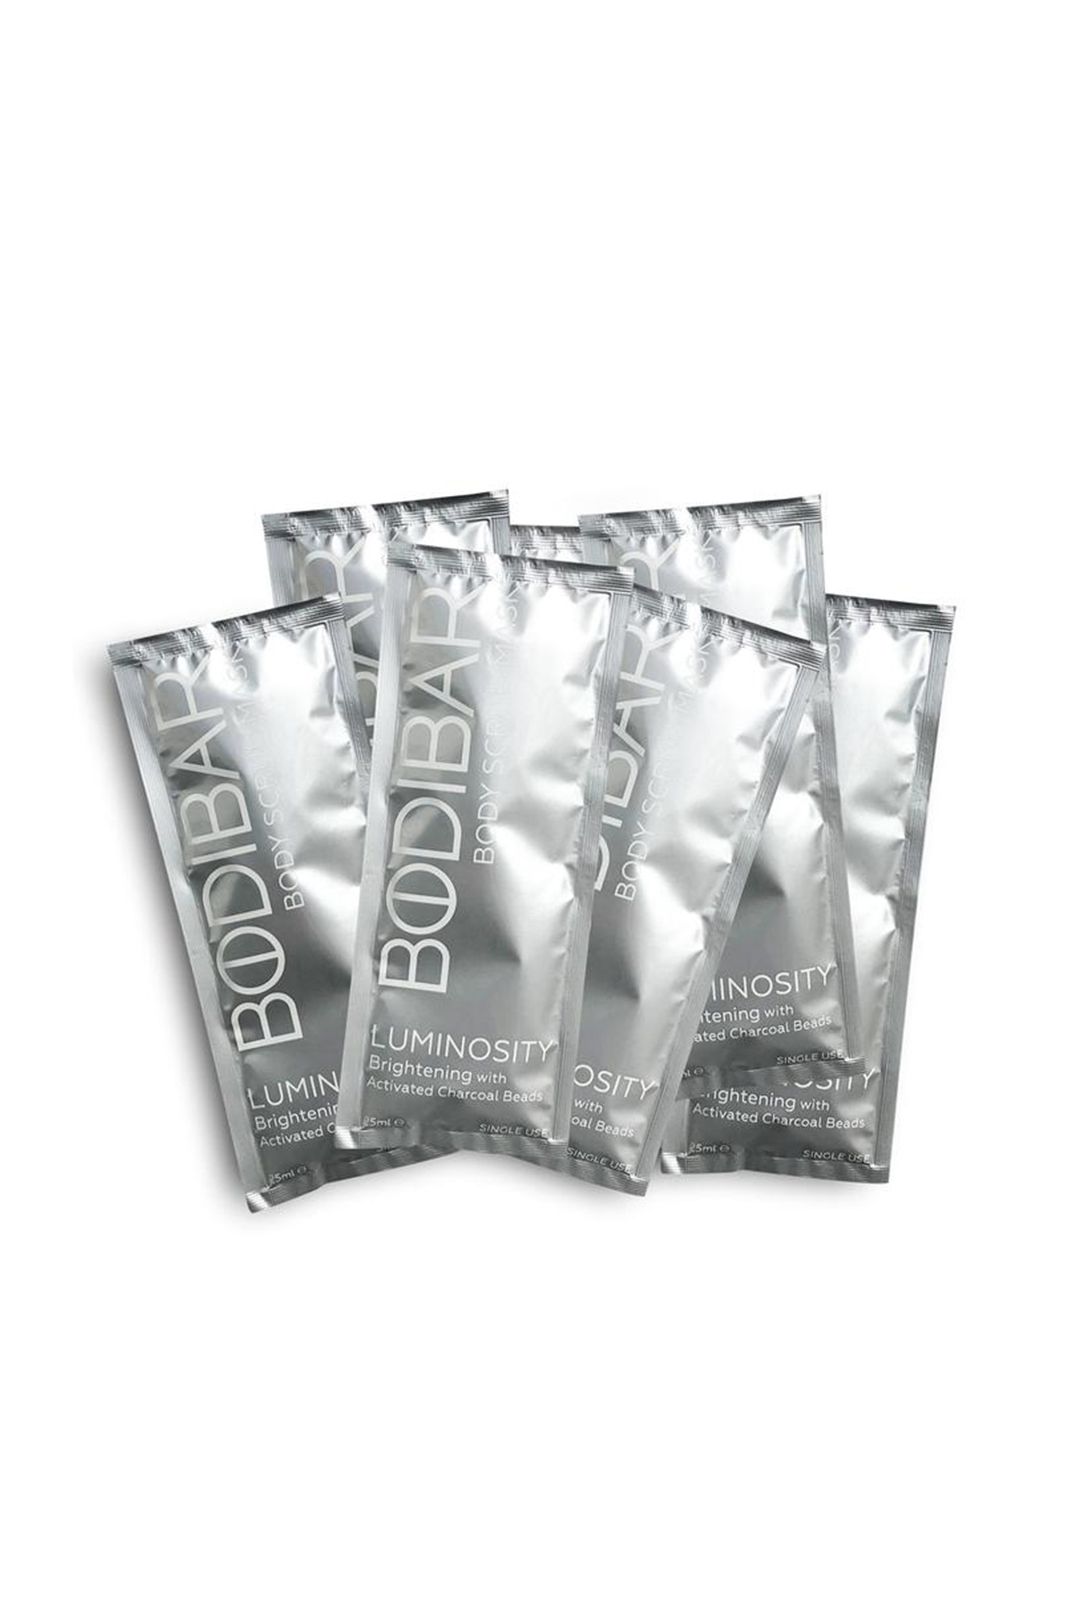 bodibar-body-scrub-mud-masks-luminosity-brightening-product-2